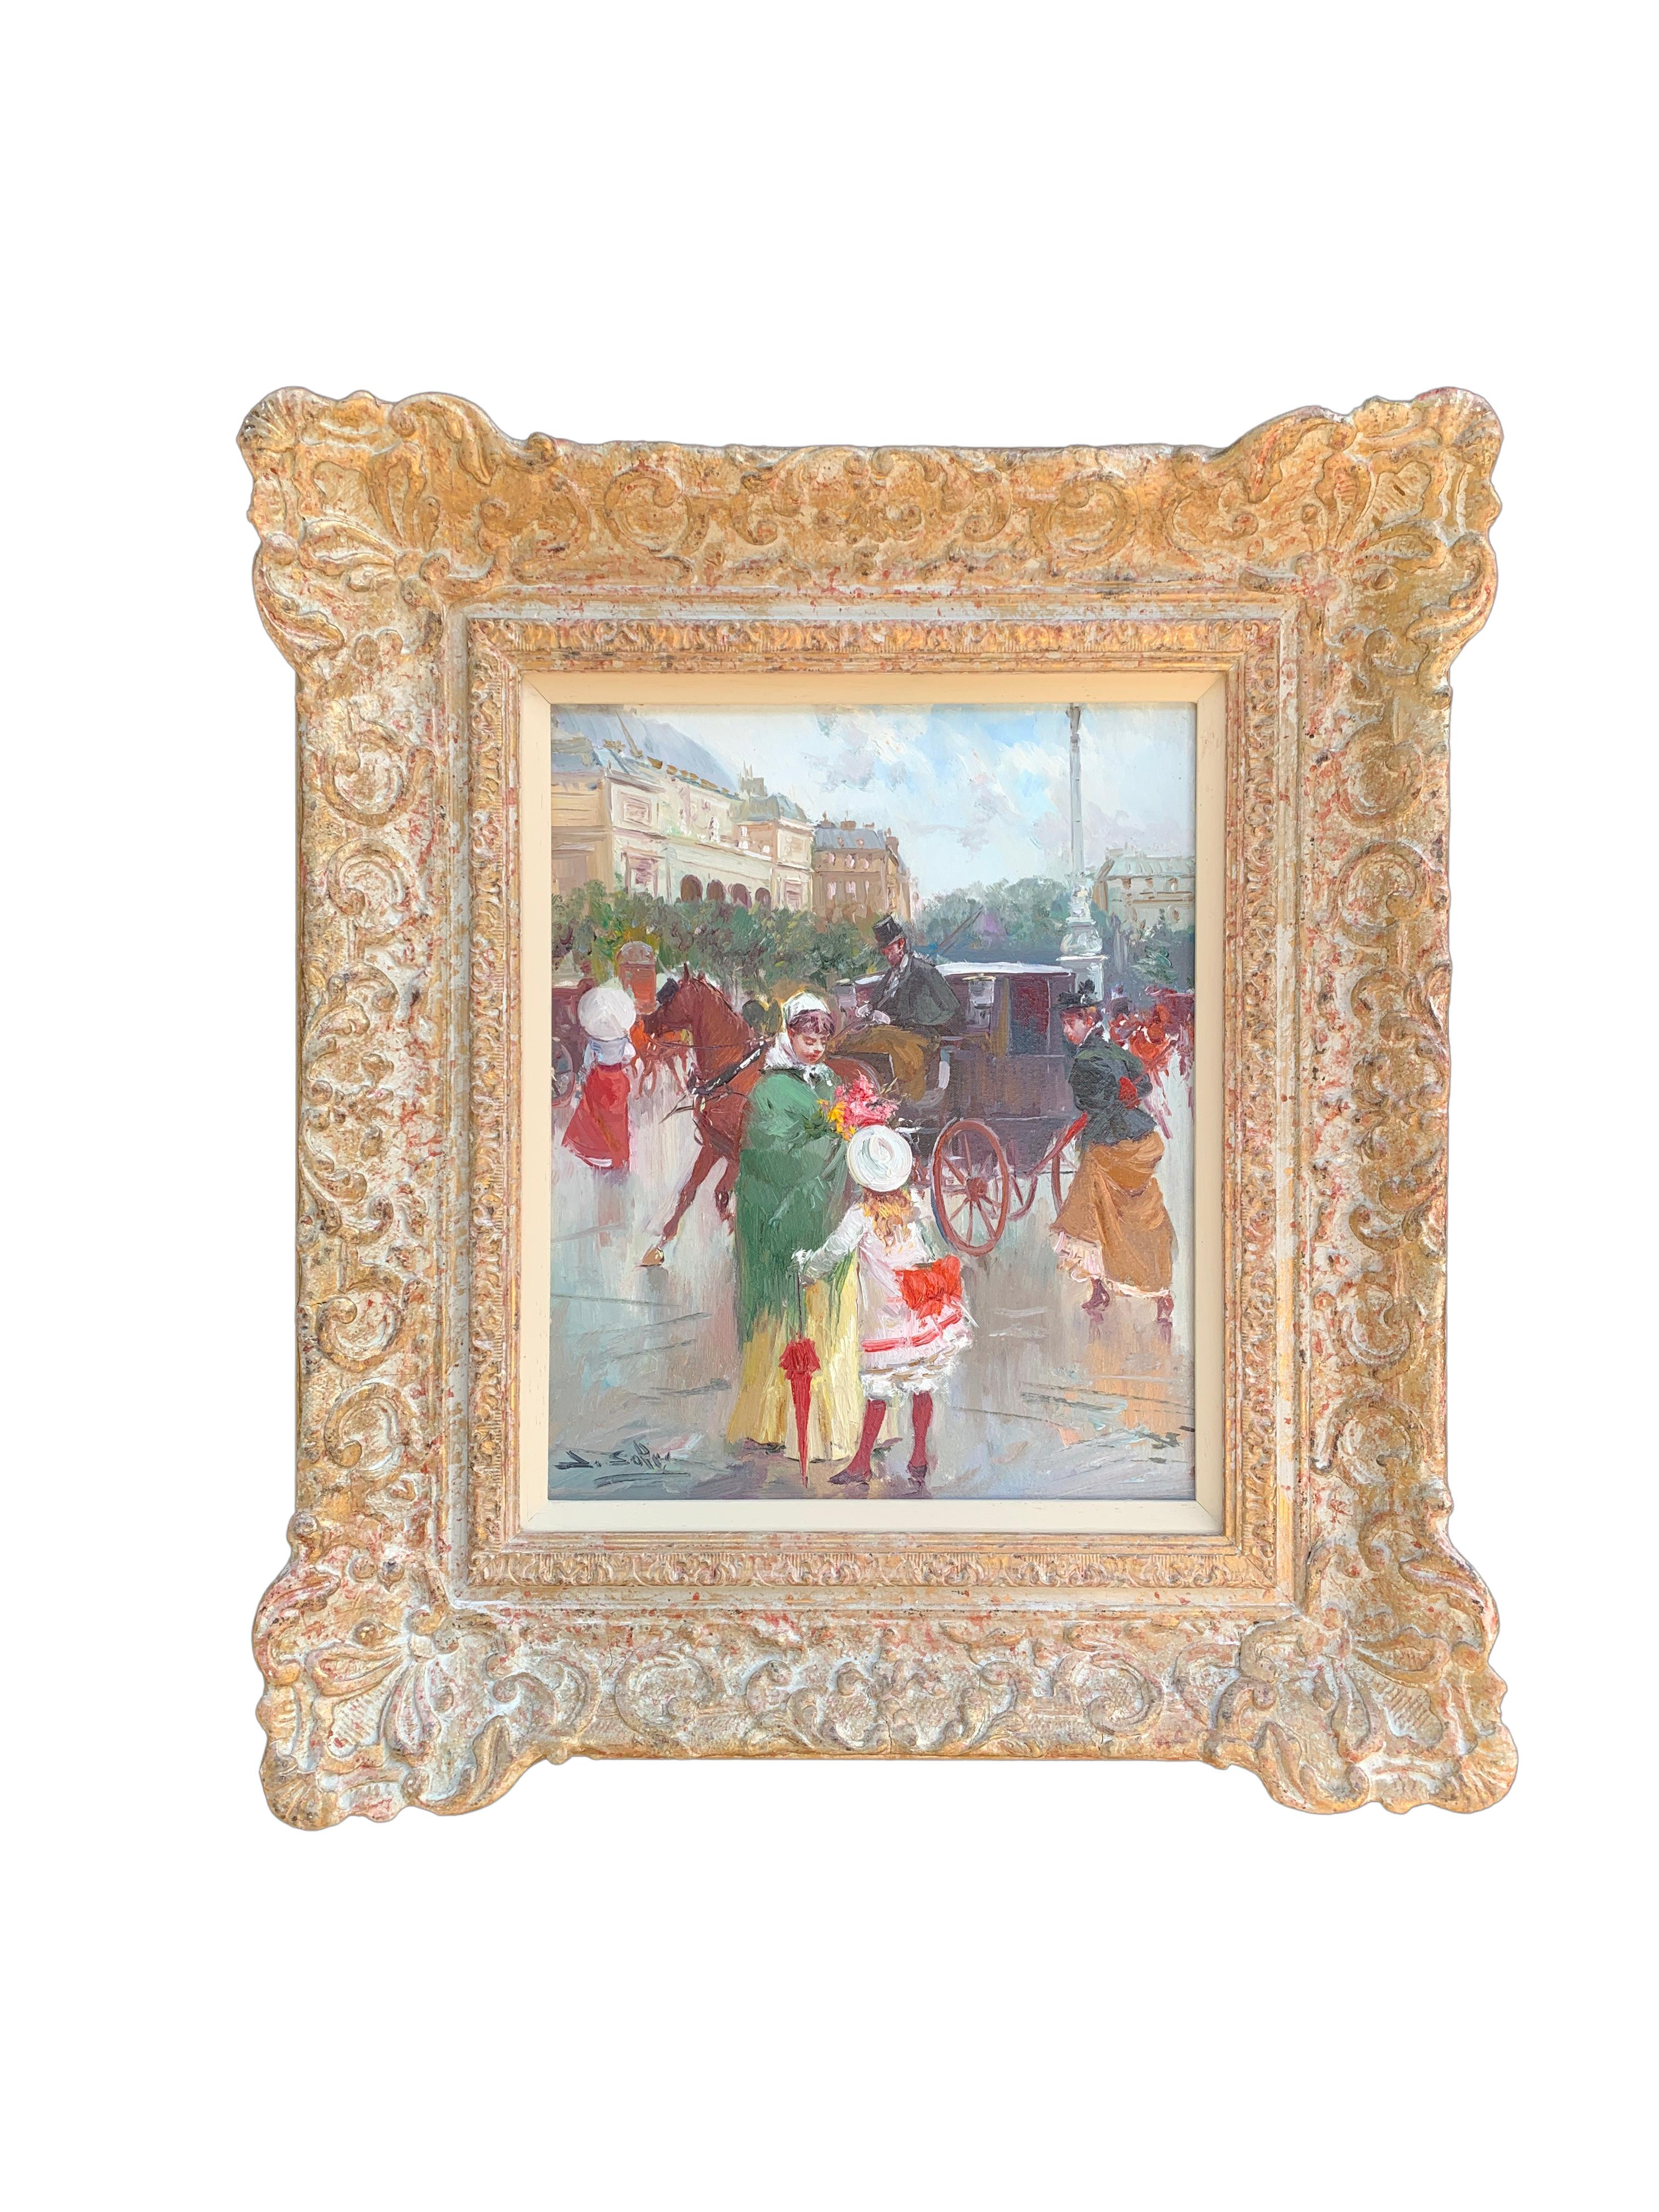 Juan De La Cruz Soler Figurative Painting - 20th century Impressionist French style figures in a Parisian cityscape.